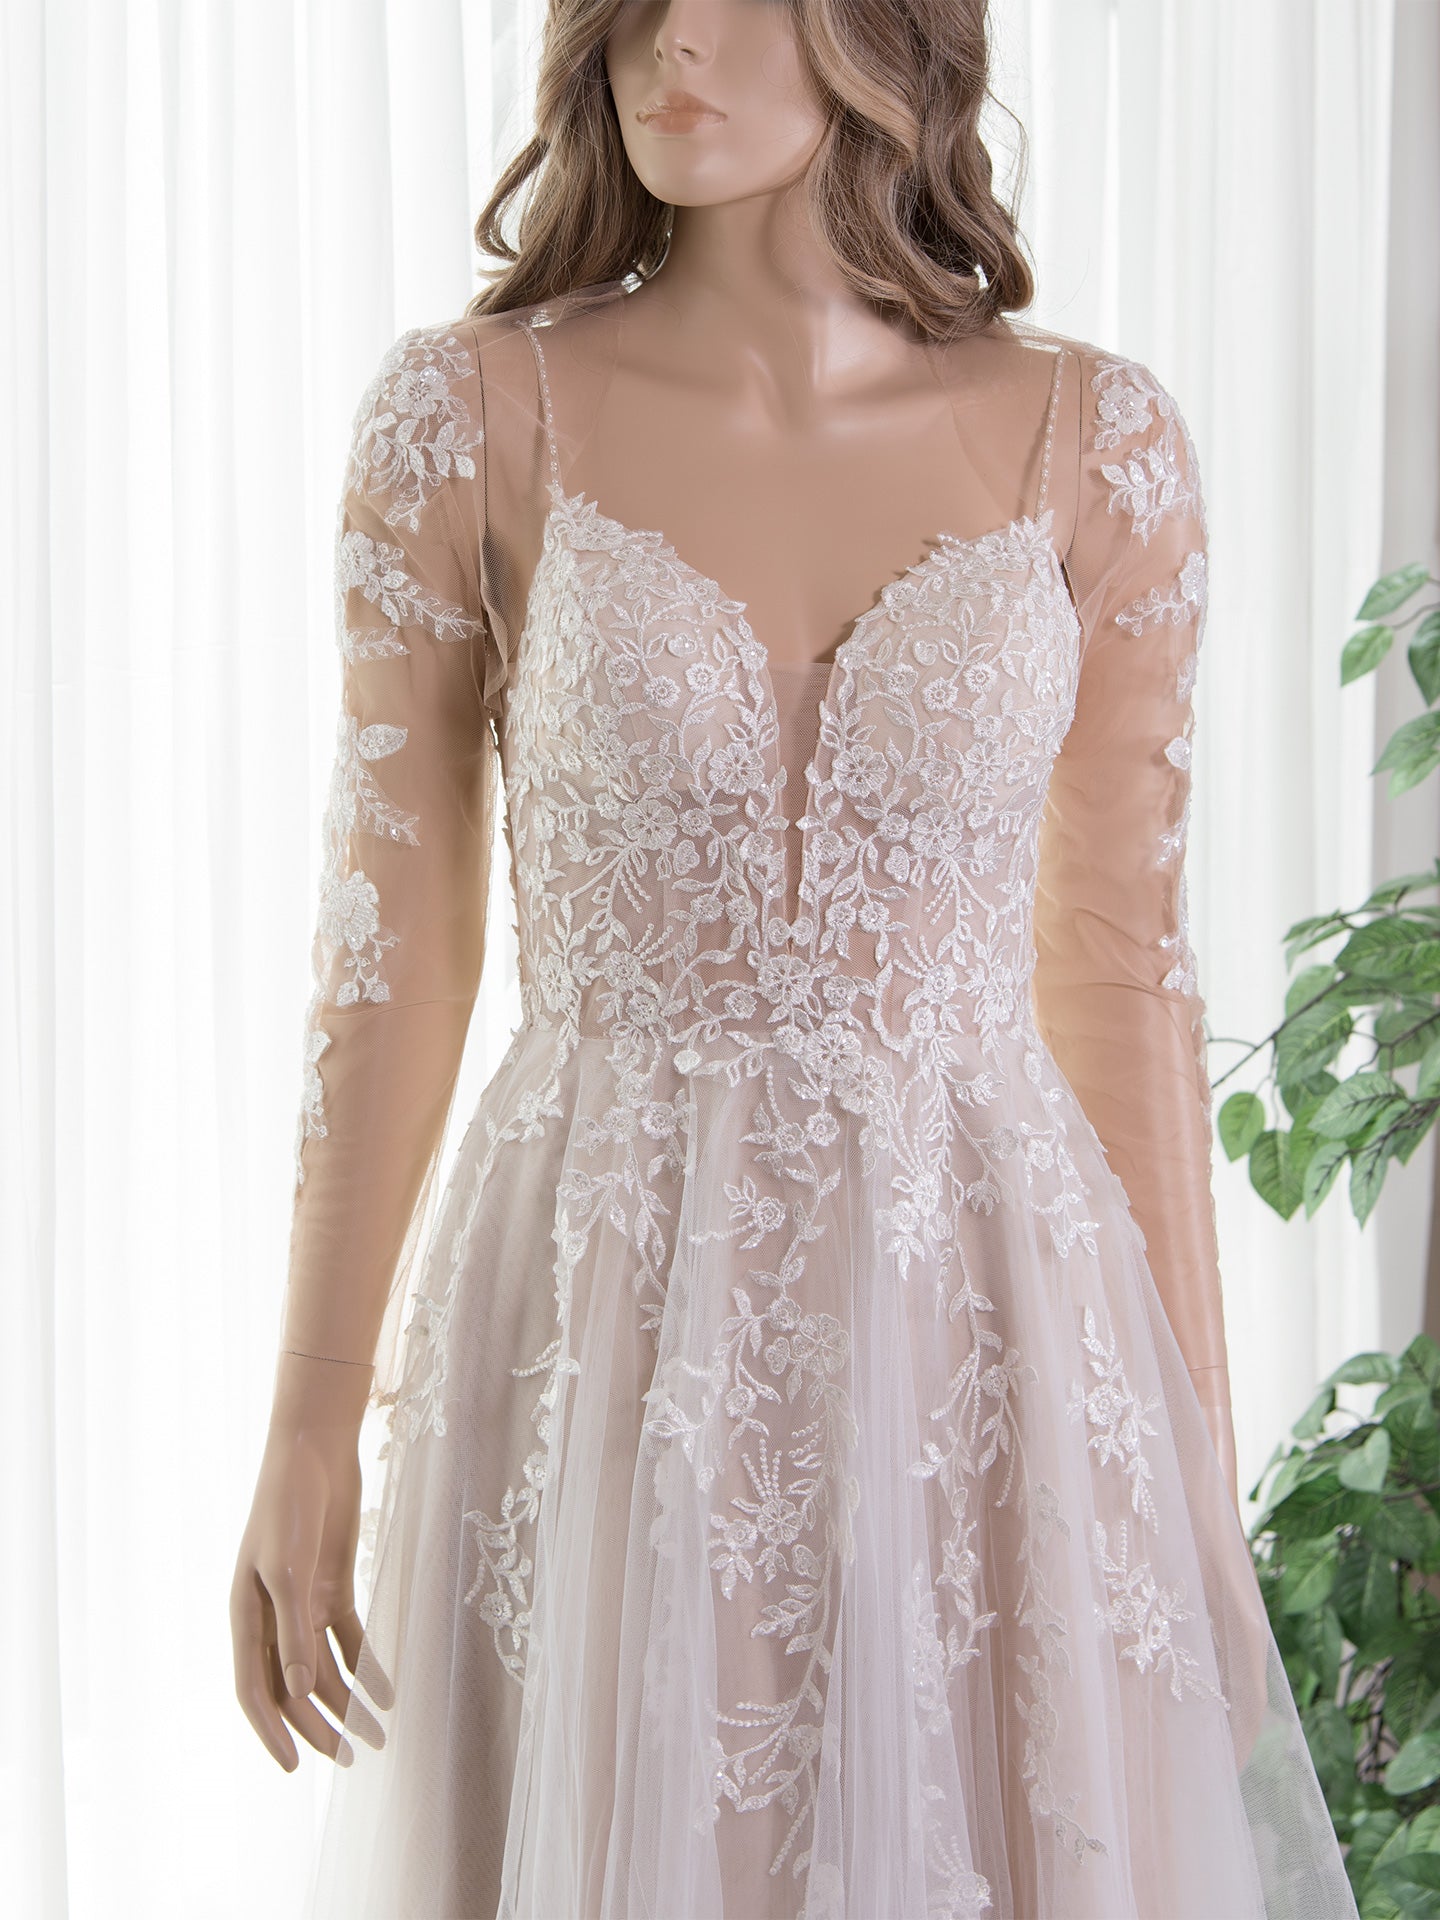 Bridal style – Sleeves in Tulip bolero